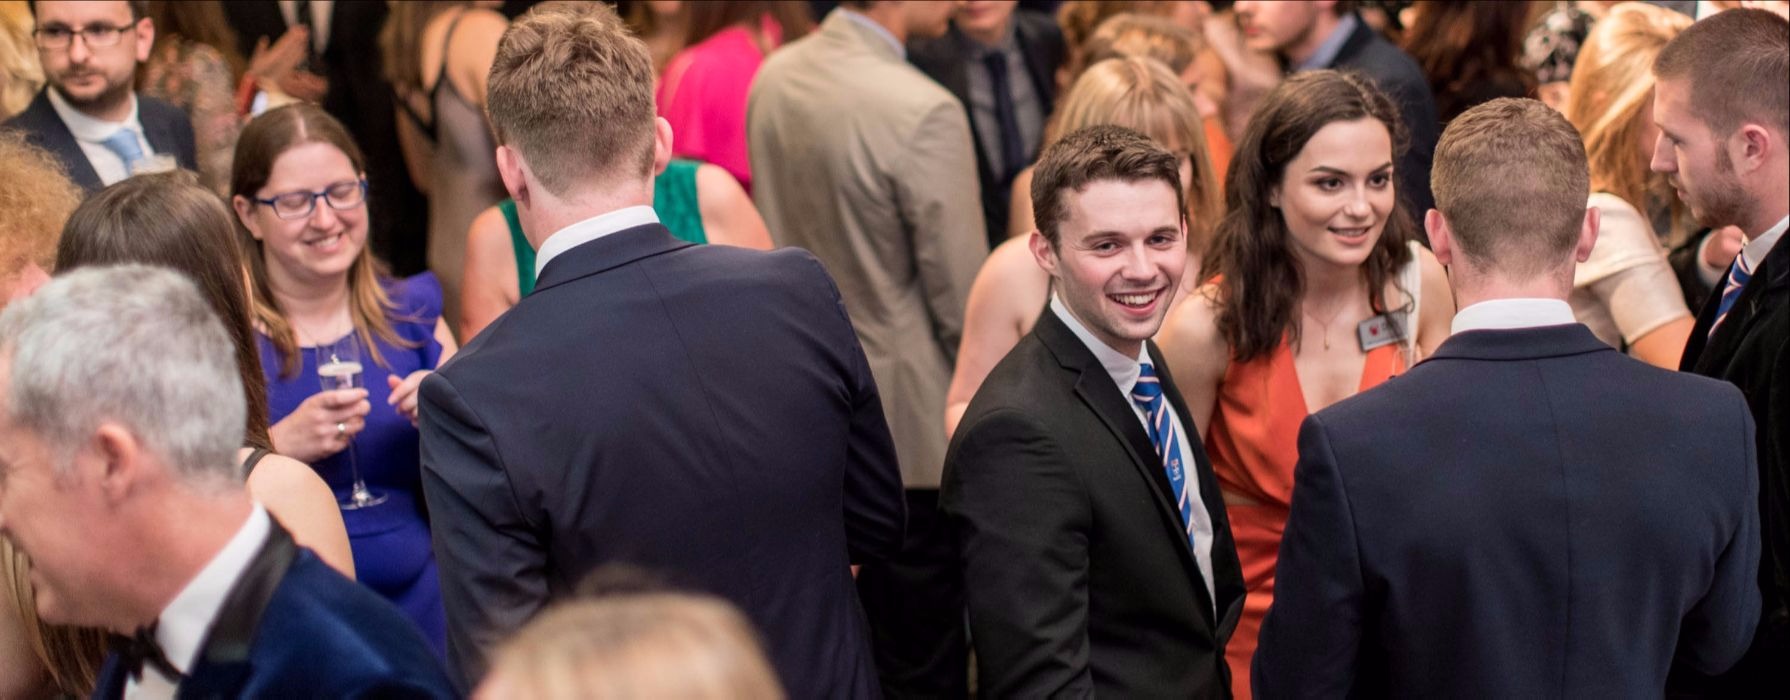 photo taken at Pride of Newcastle University awards showing students celebrating